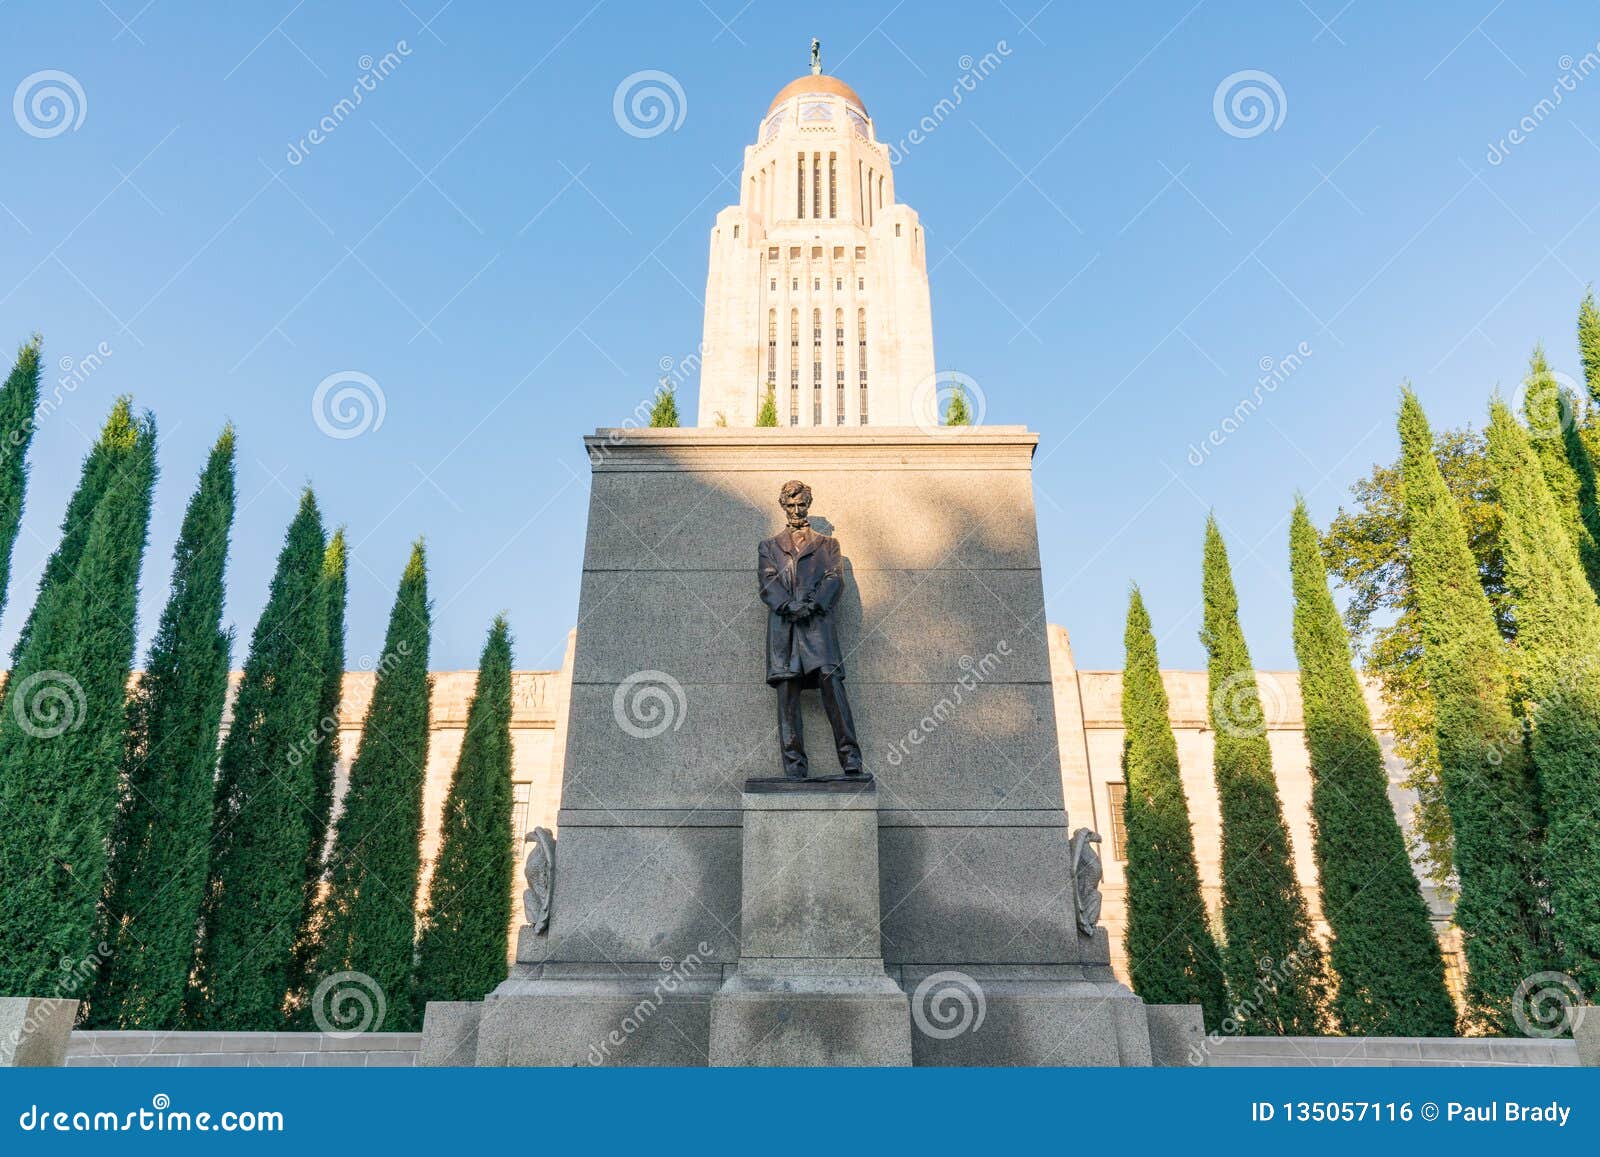 lincoln statue at the nebraska capitol building